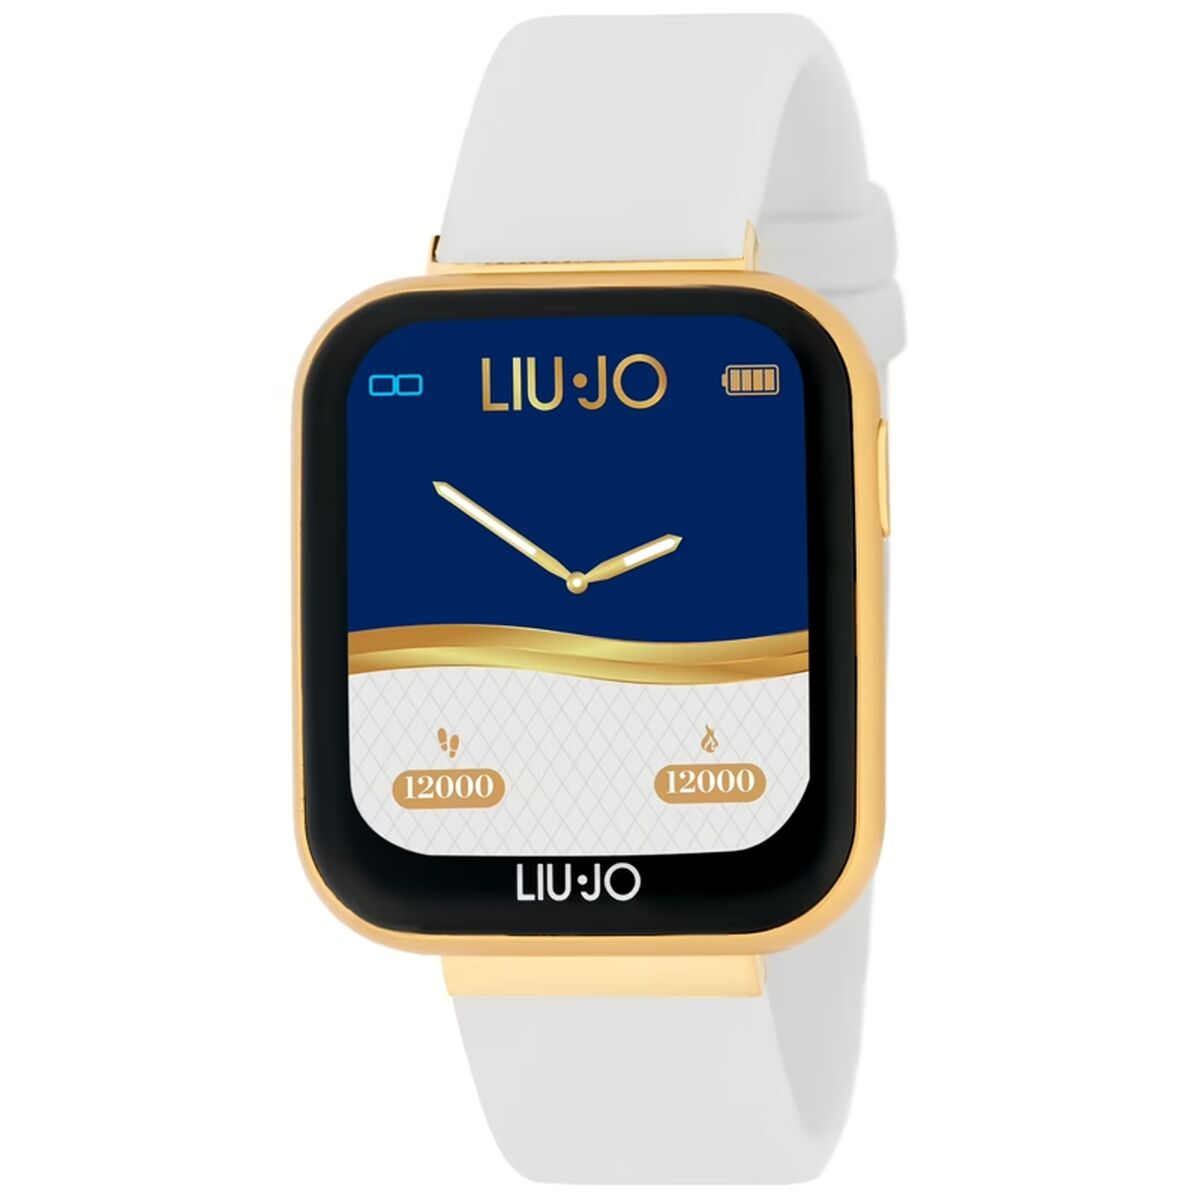 Kaufe Smartwatch LIU JO SWLJ109 bei AWK Flagship um € 170.00